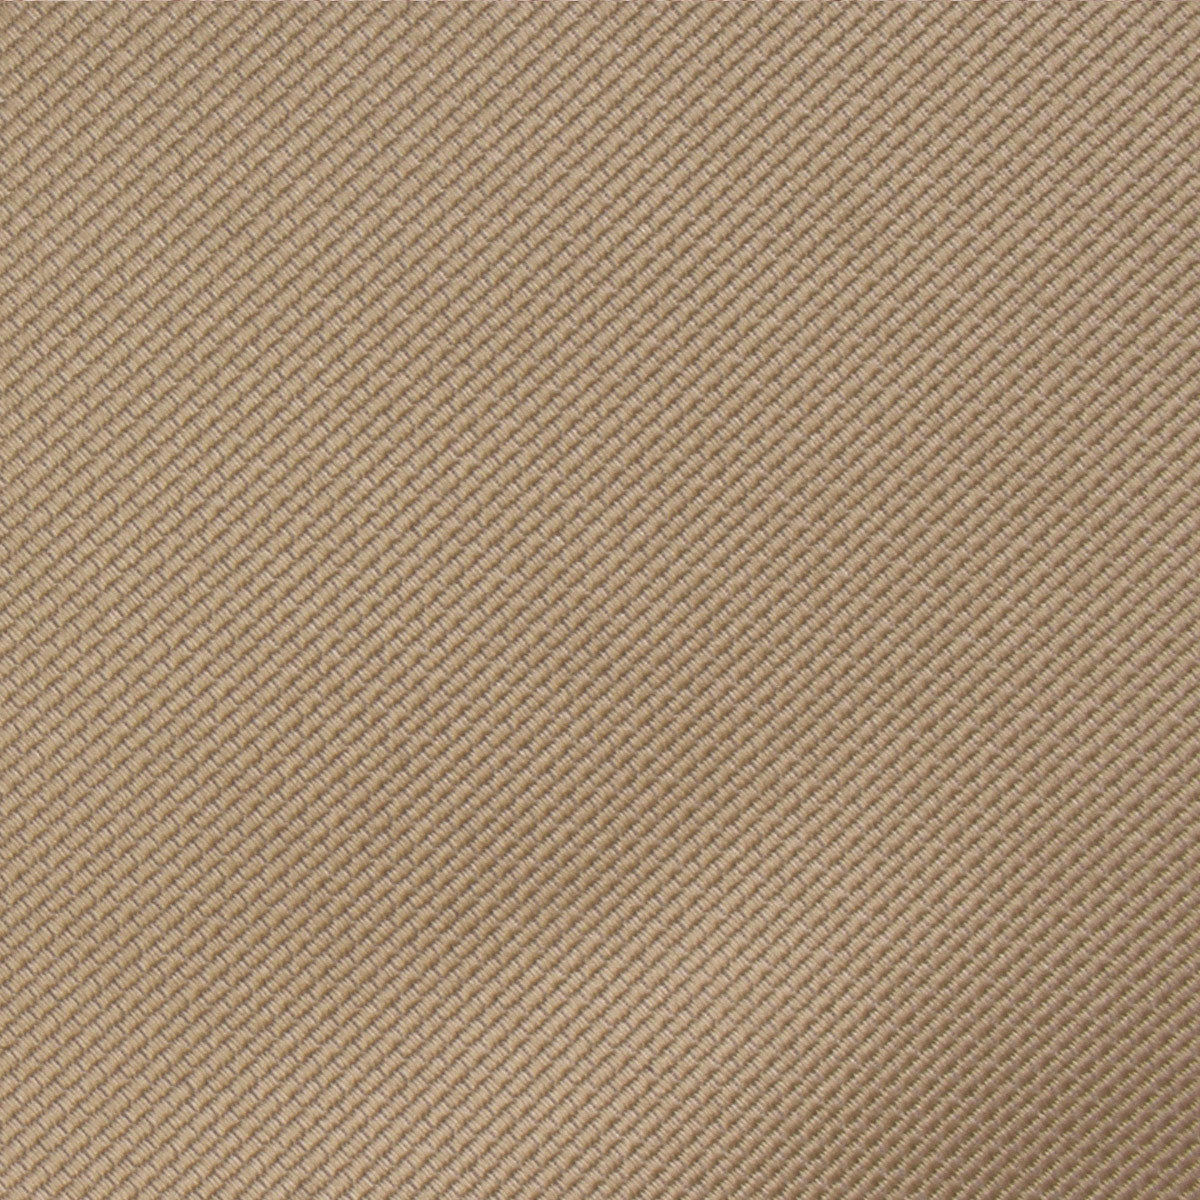 Champagne Gold Metallic Weave Pocket Square Fabric